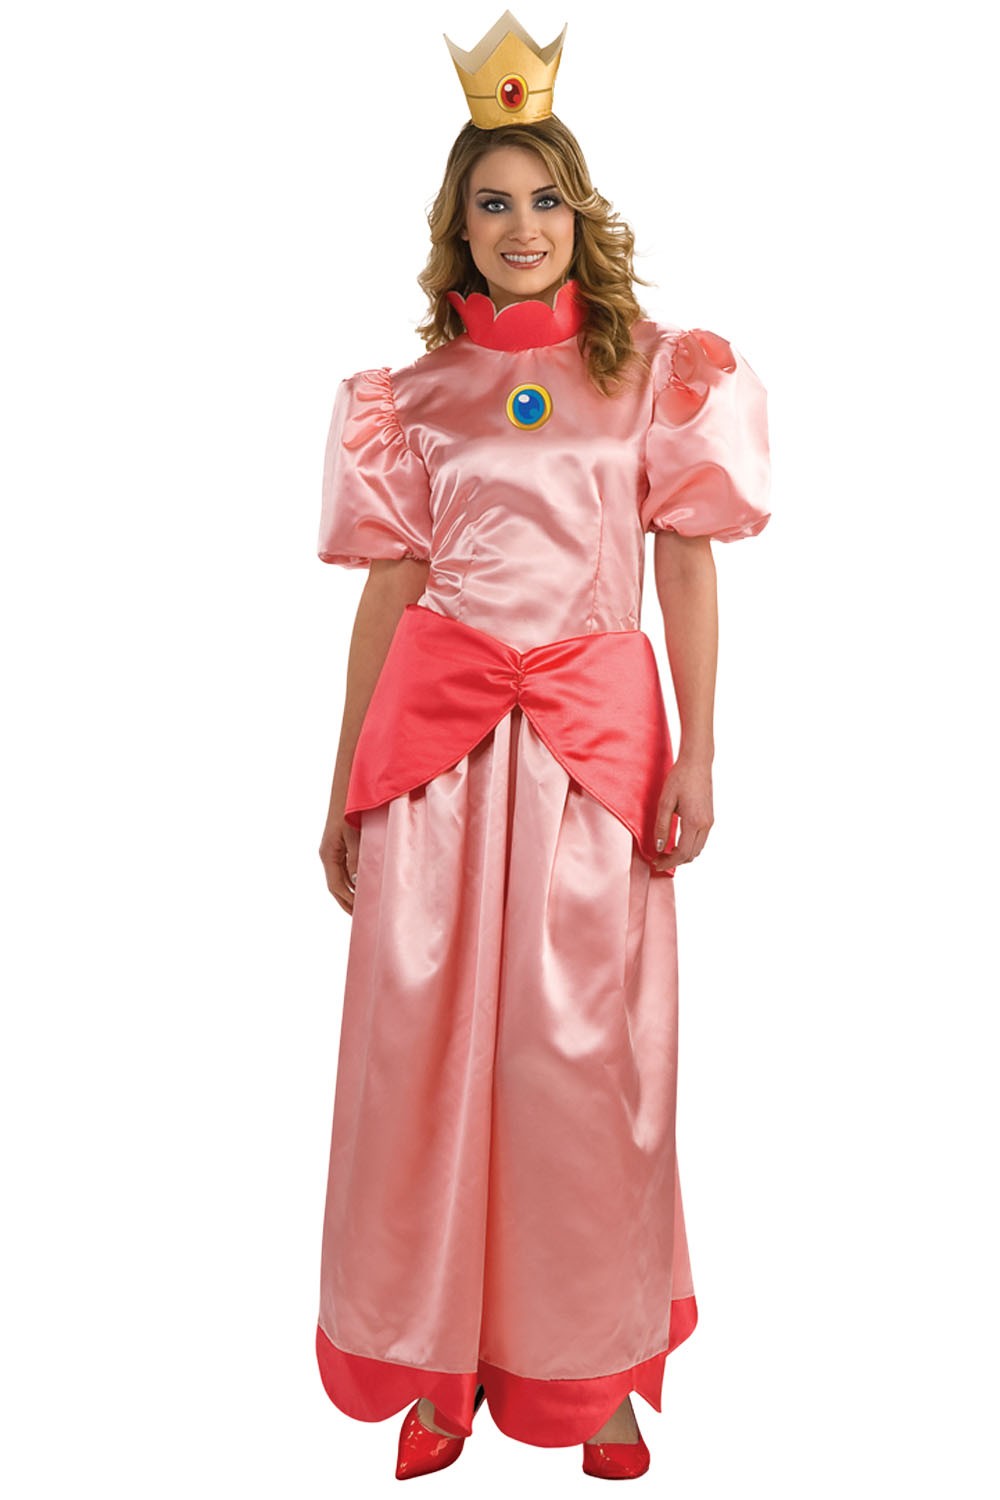 Costume Peachy princesse rose pour adultes, robe rose